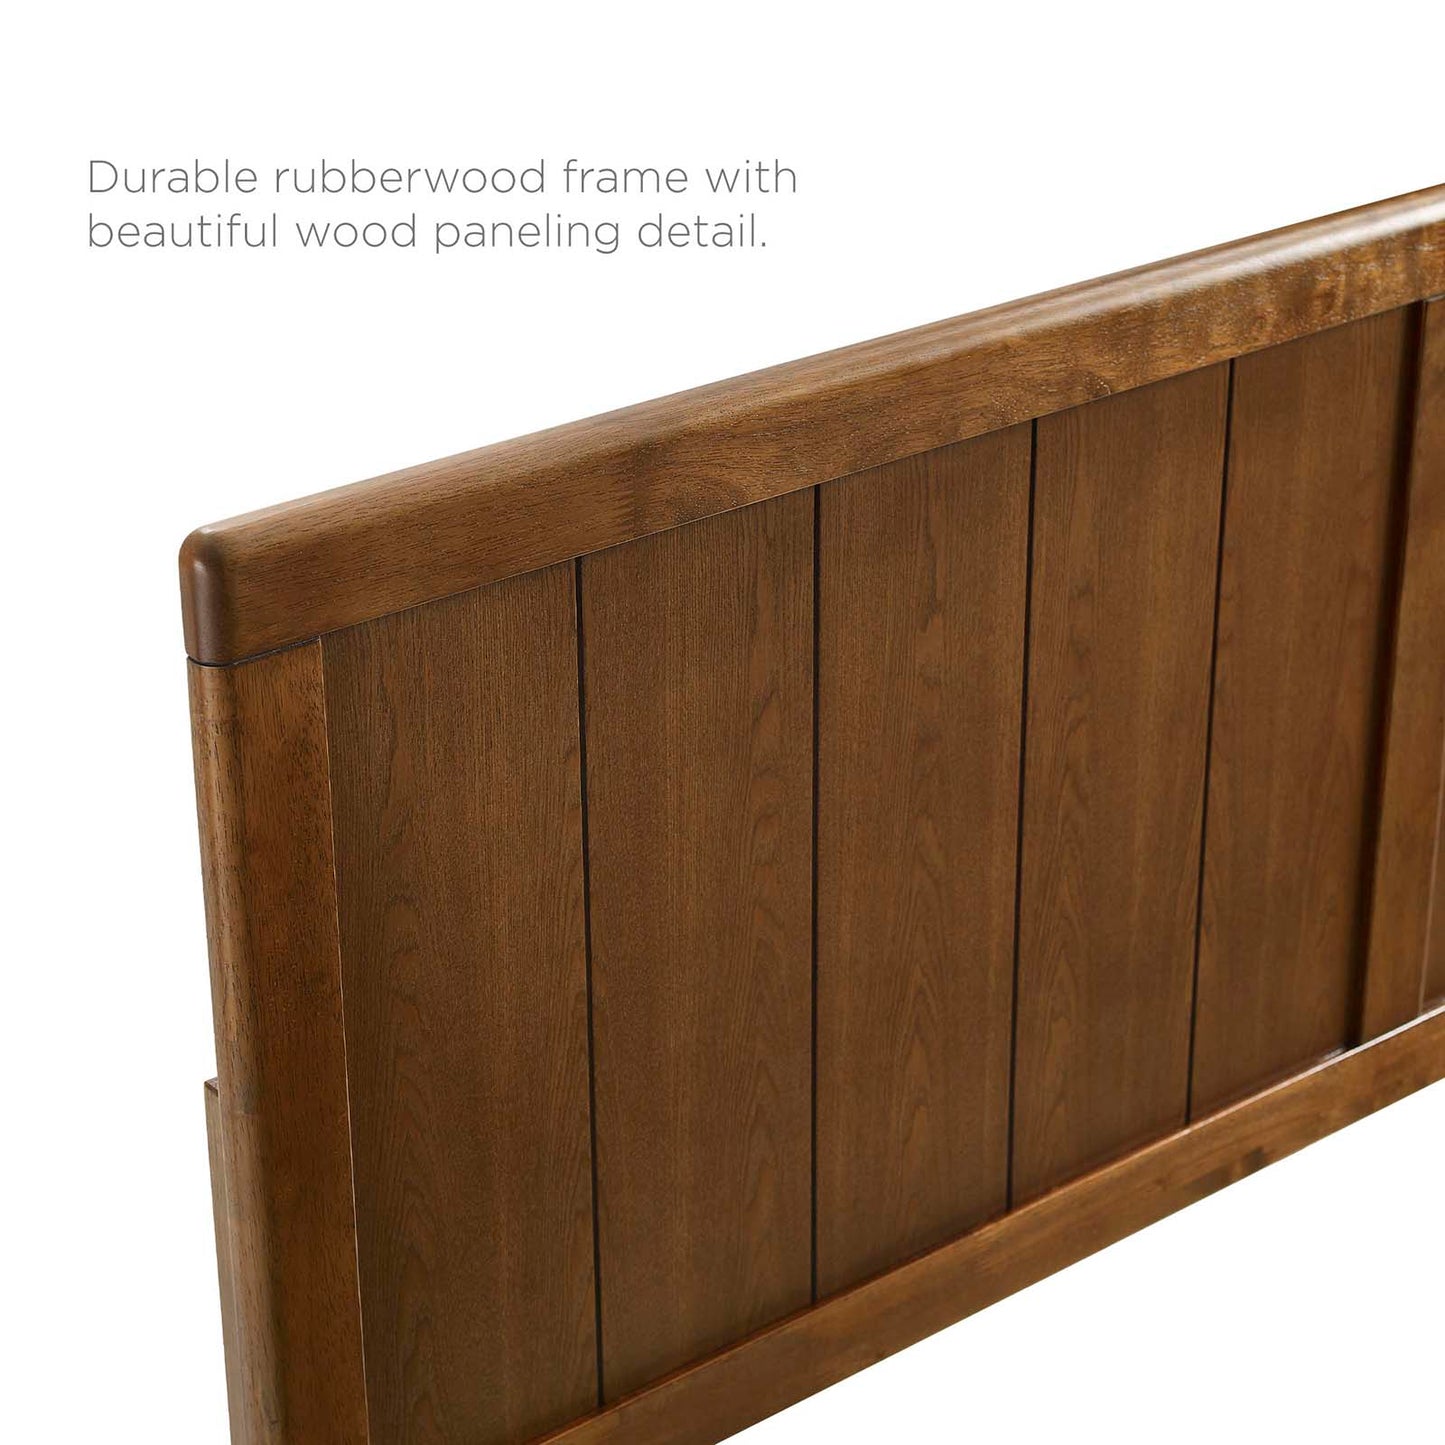 Abhita Wood King Platform Bed With Angular Frame